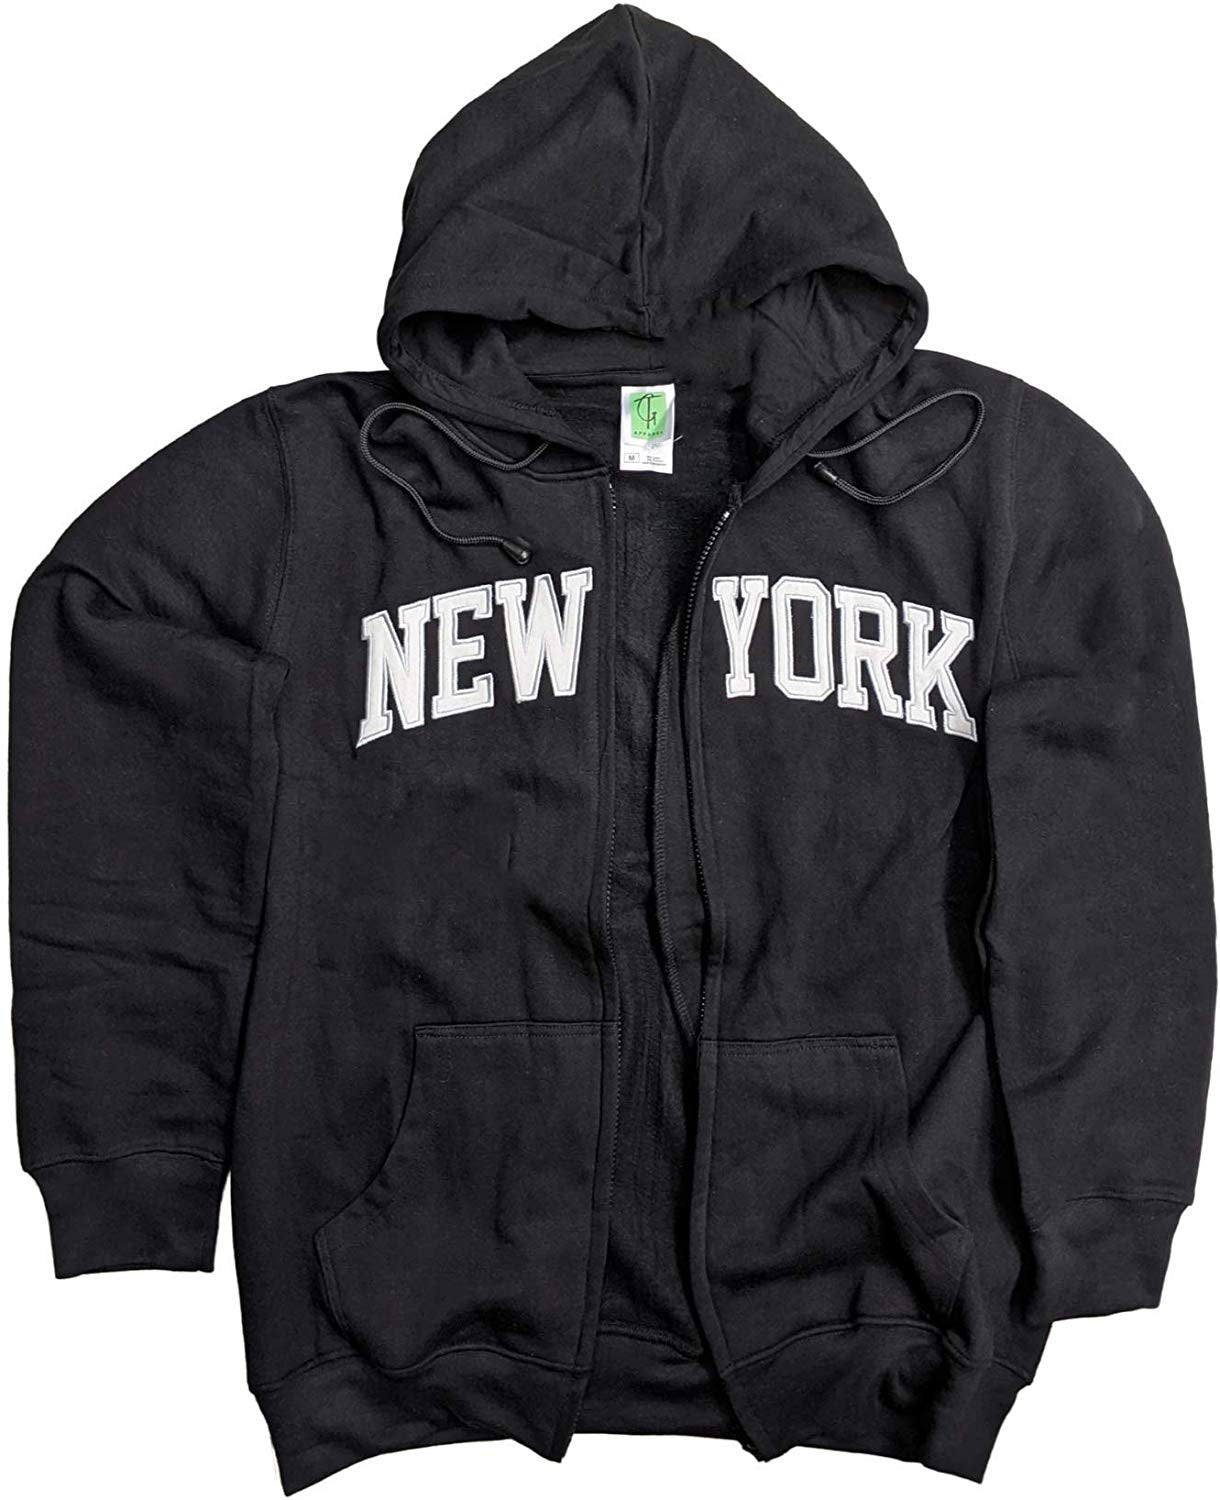 Men's New York City Zippered Hoodie Sweatshirt Black Navy Pink Retro Style